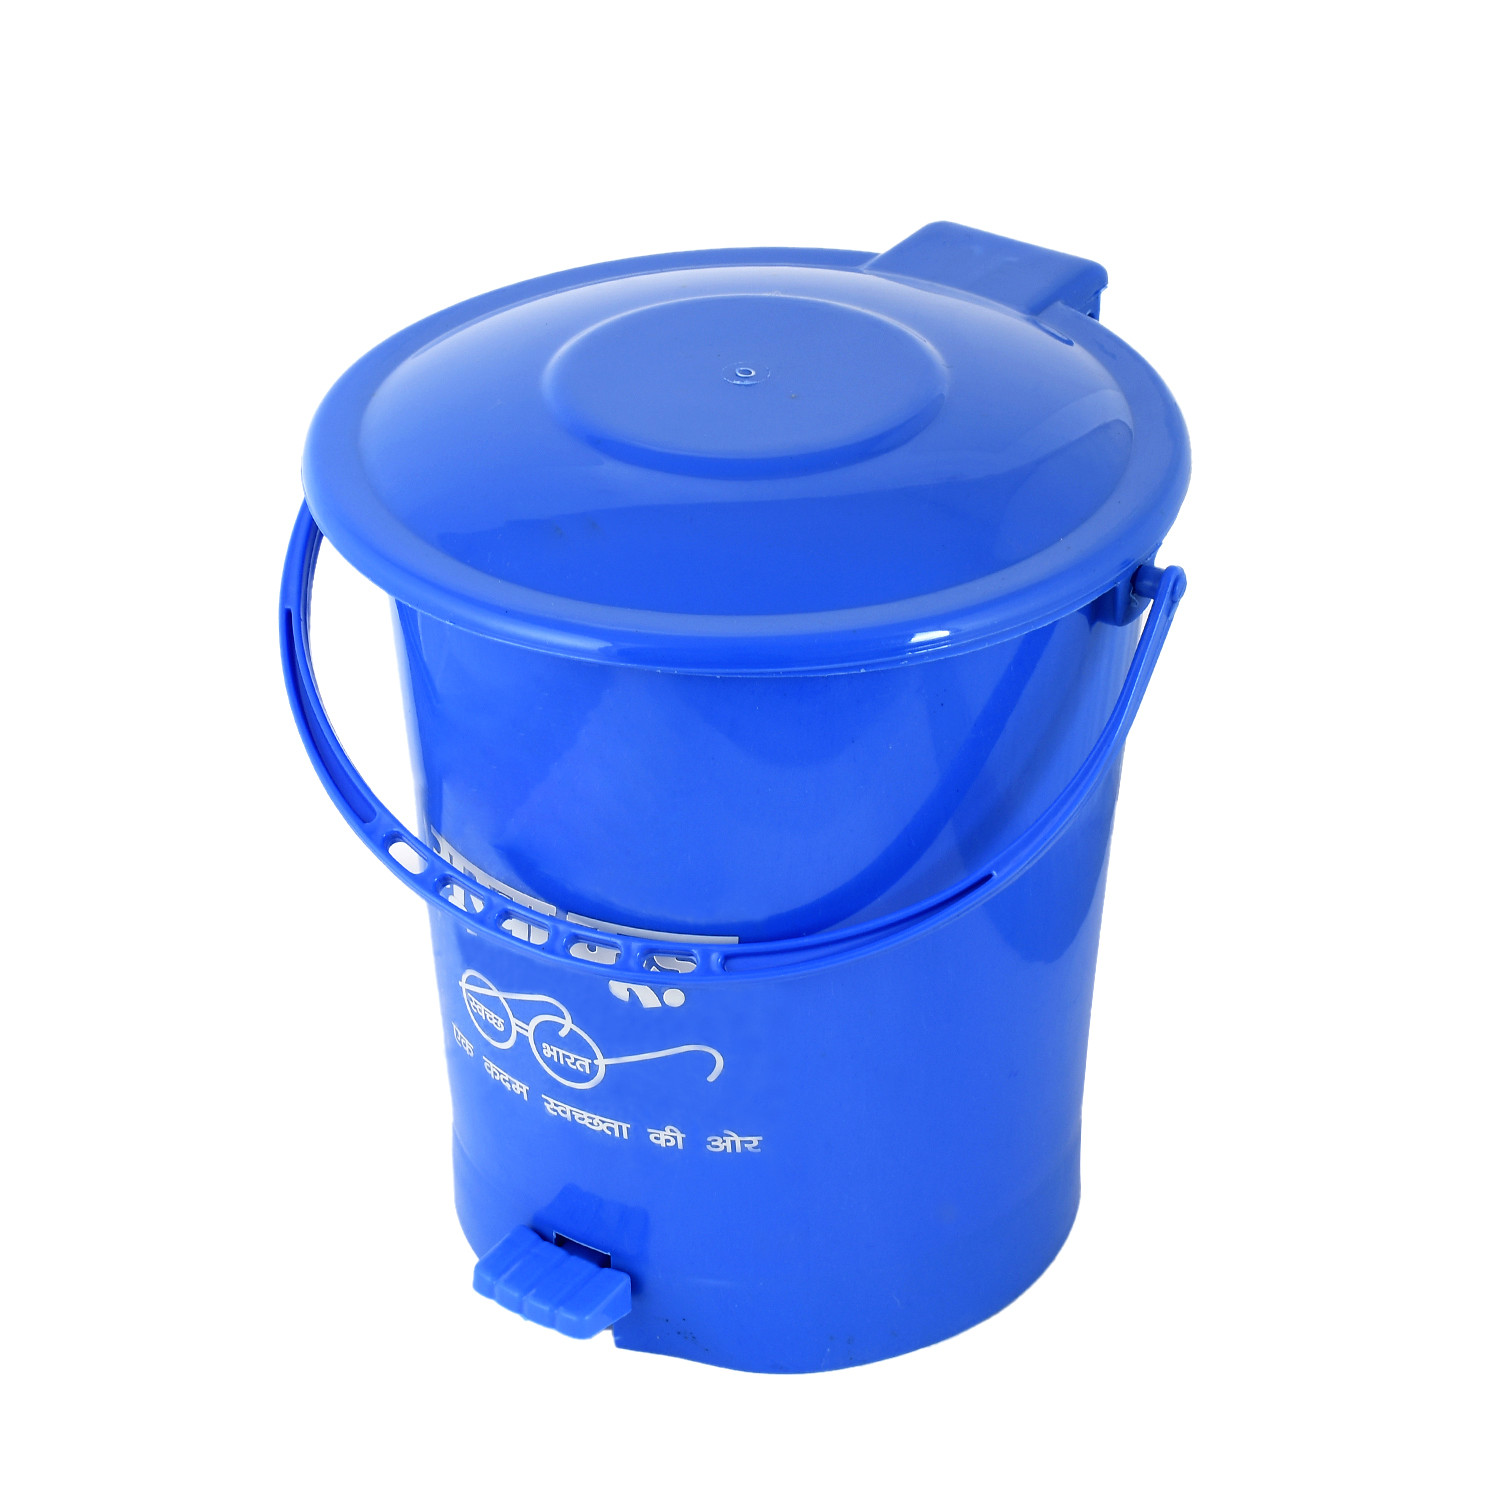 Kuber Industries Swach Bharat Plastic Dustbin Garbage Bin with Handle,10 Liters (Blue) -CTKTC38067